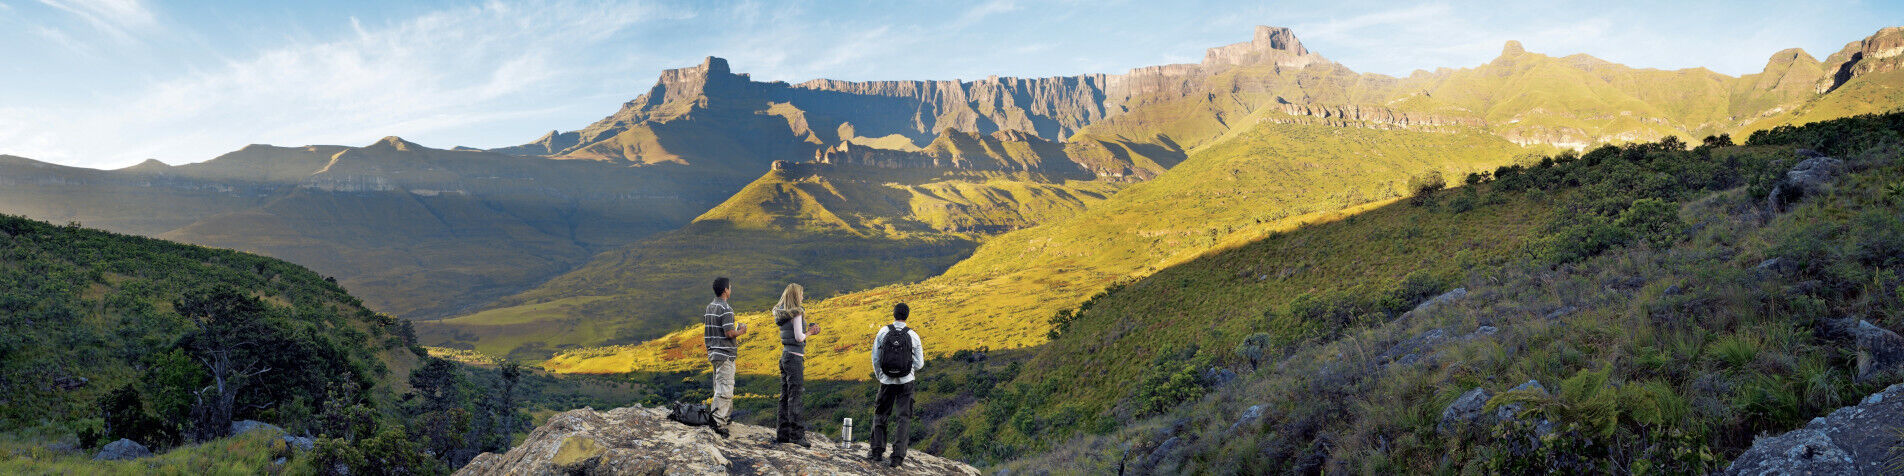 Banner Drakensberg Mountains sunrise Mpumalanga Province South Africa